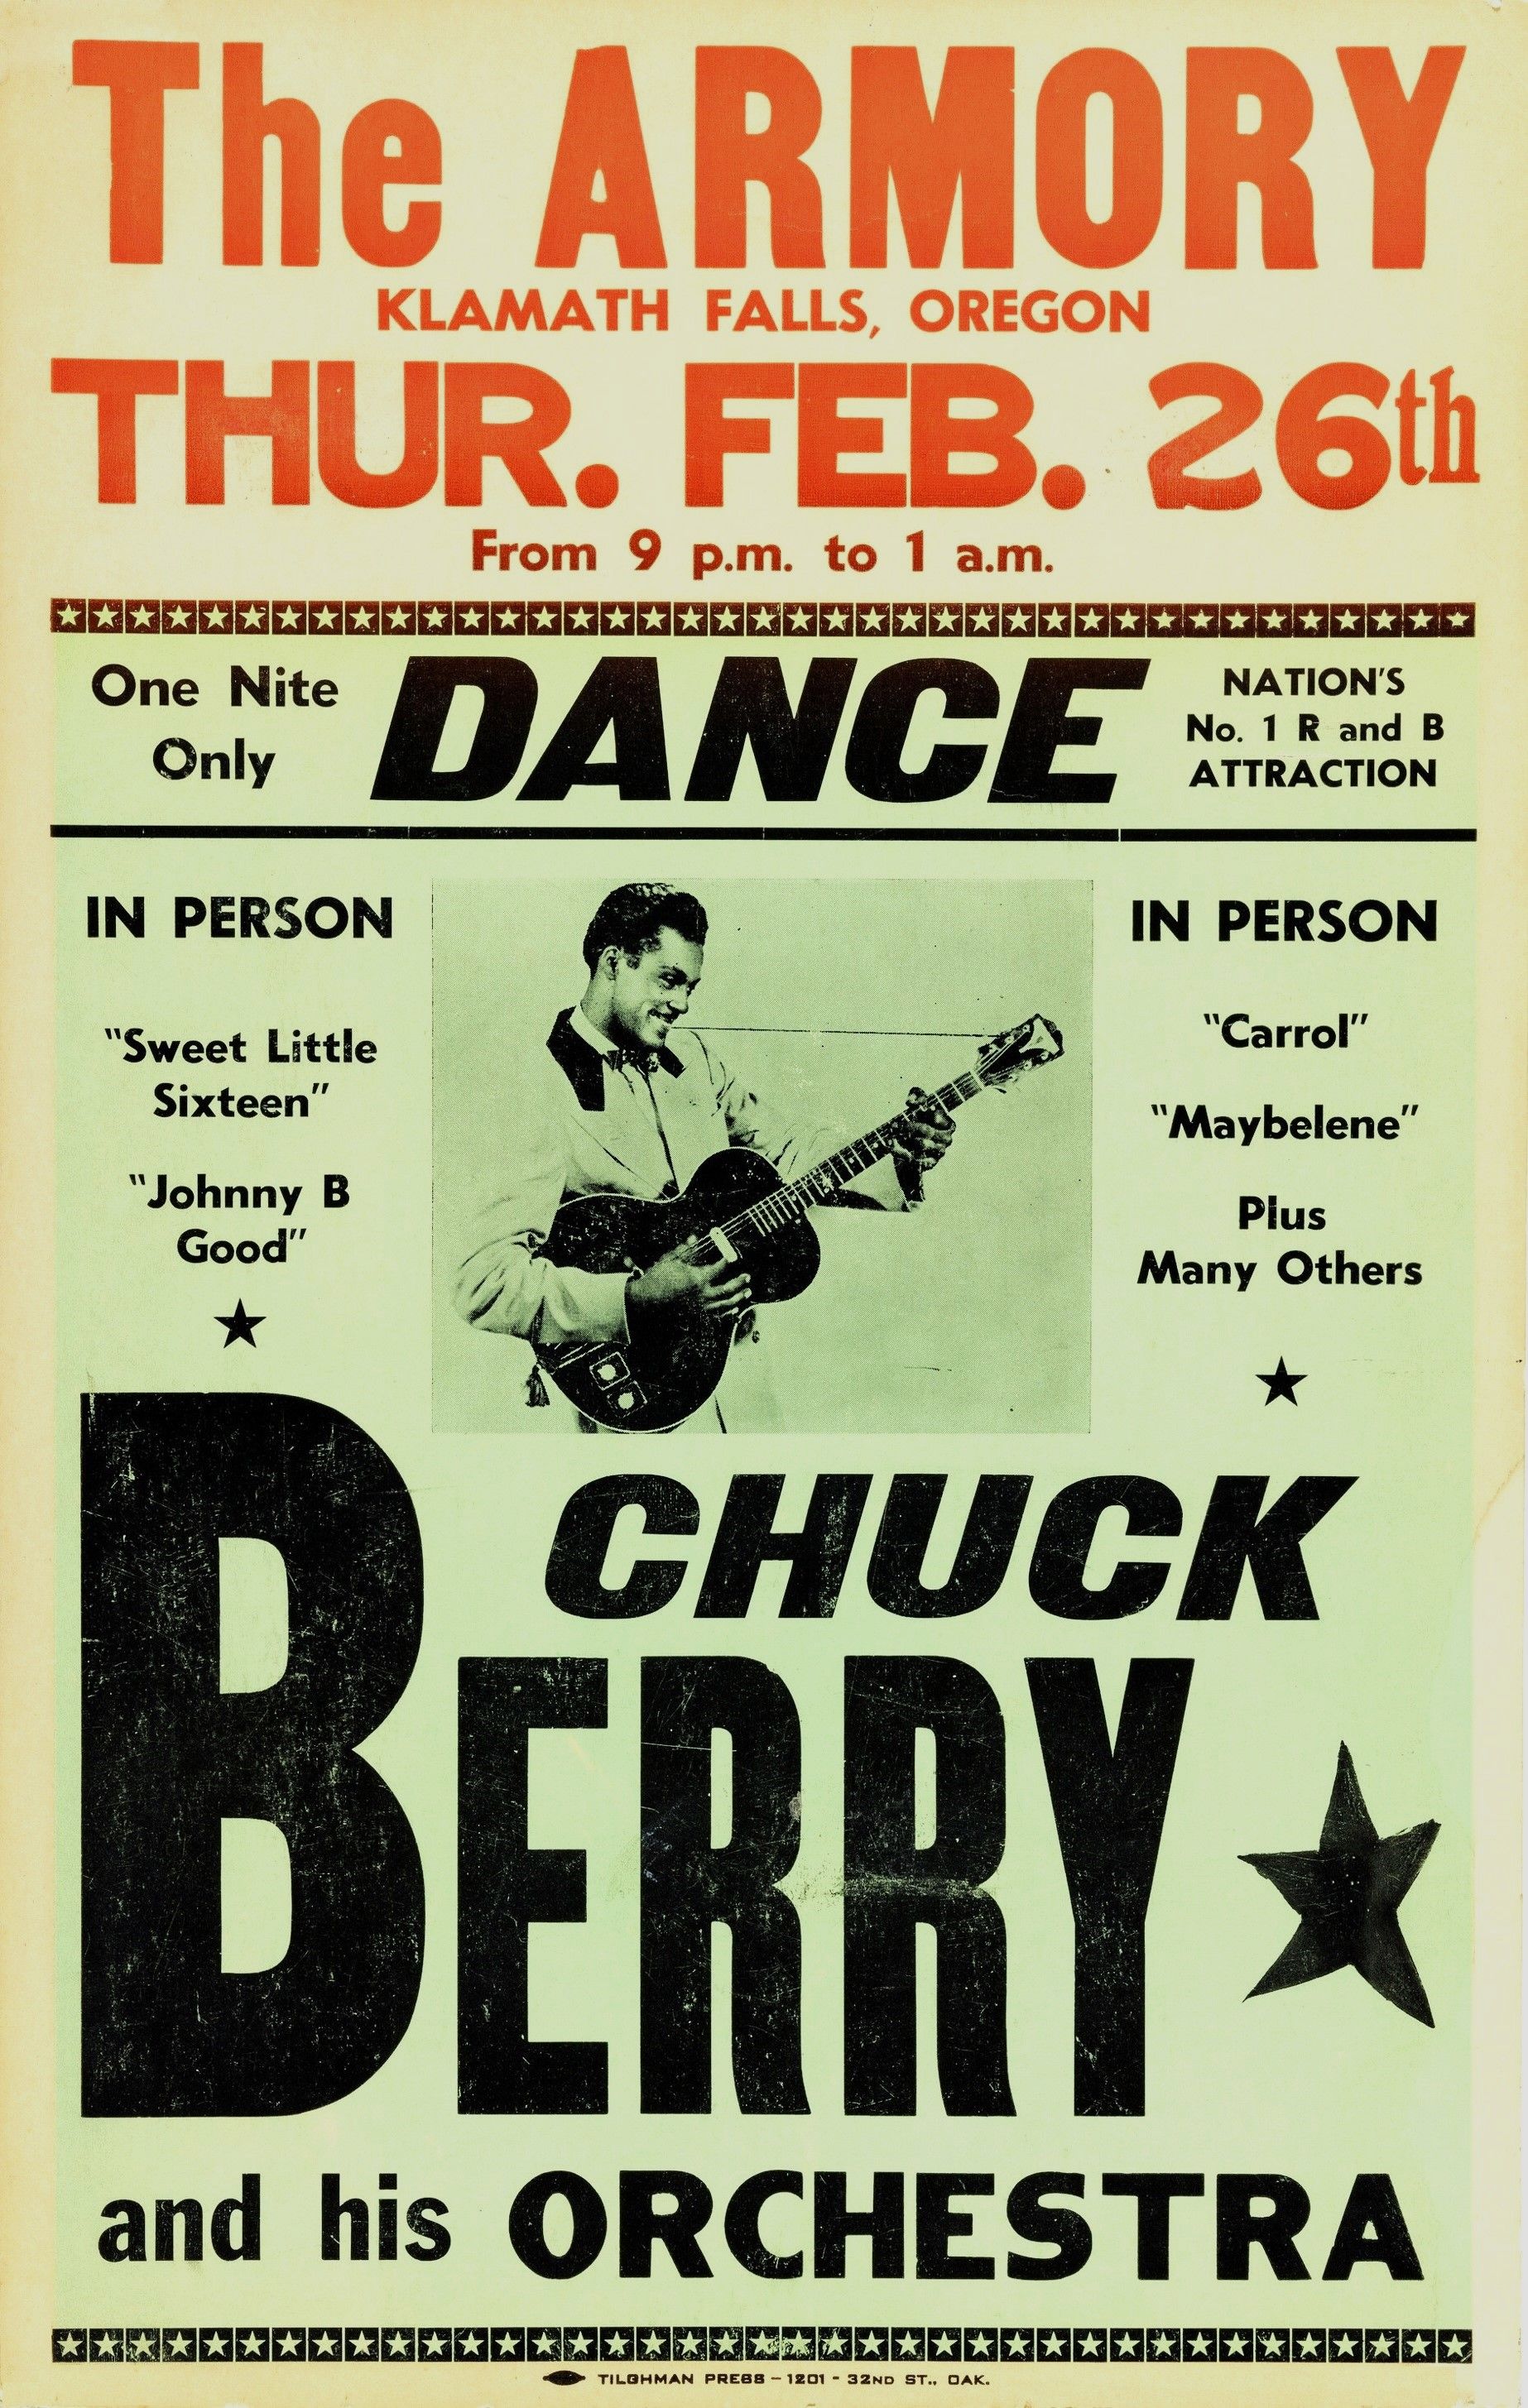 Chuck Berry The Armory Klamath Falls 1959 Concert Poster